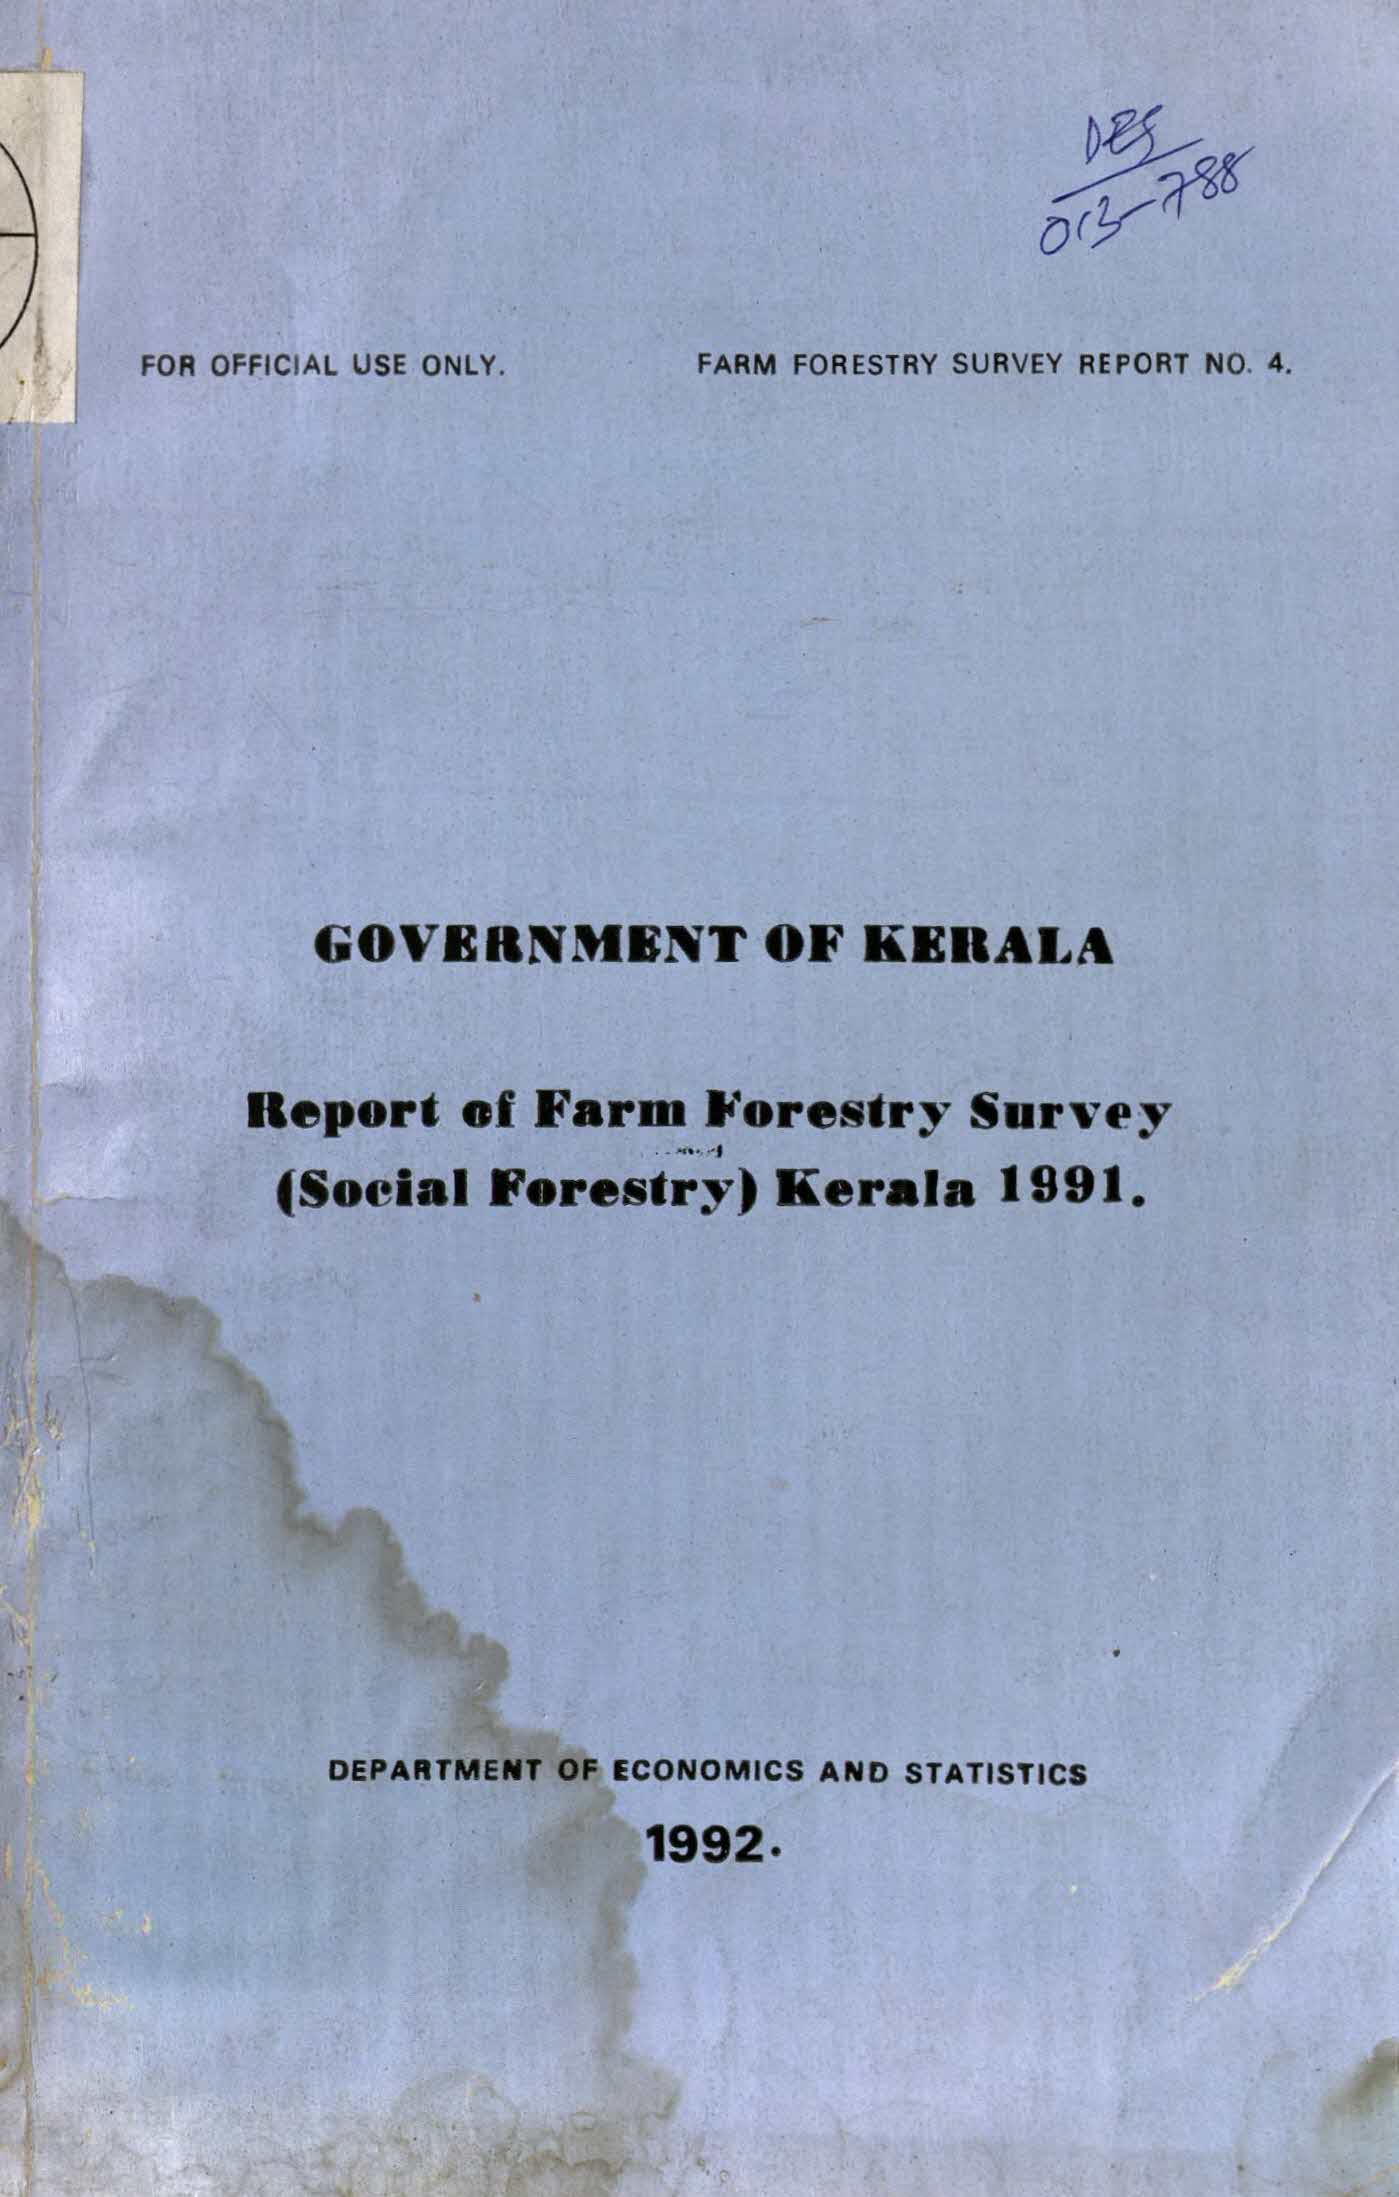 REPORT OF FARM FORESTRY SURVEY (SOCIAL FORESTRY) KERALA 1991